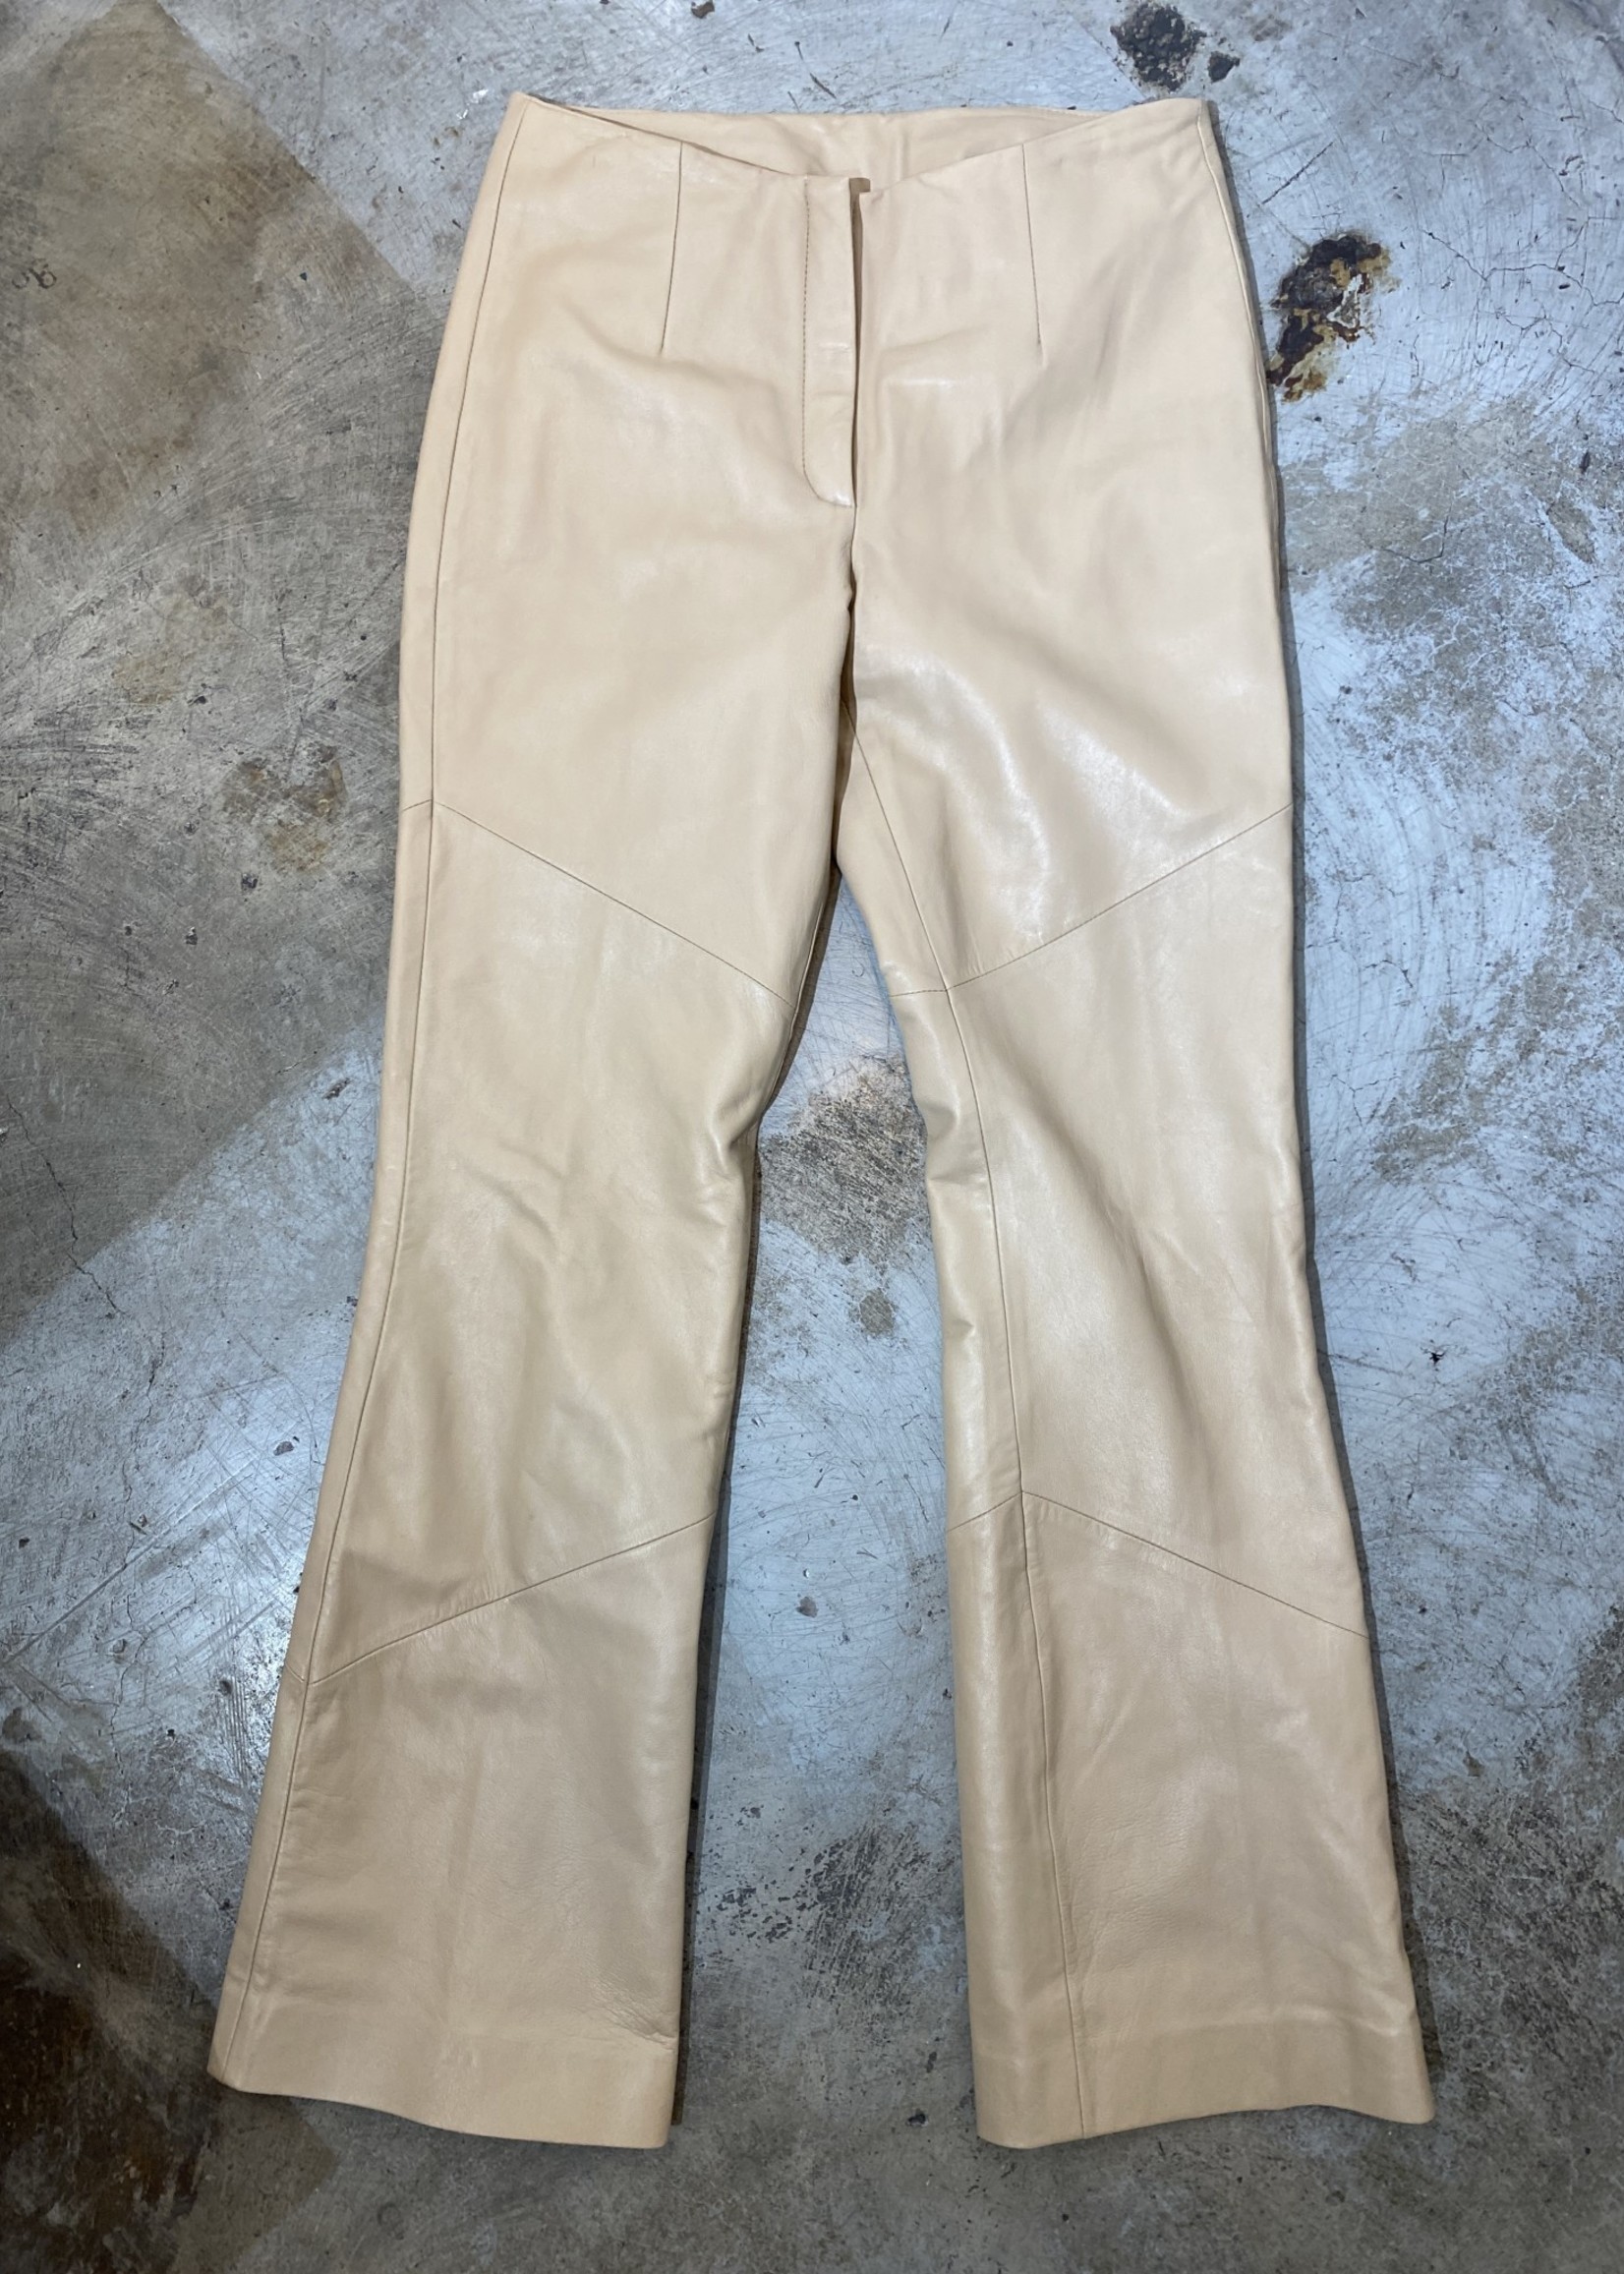 Wilsons Tan Leather Bootcut Pants 28